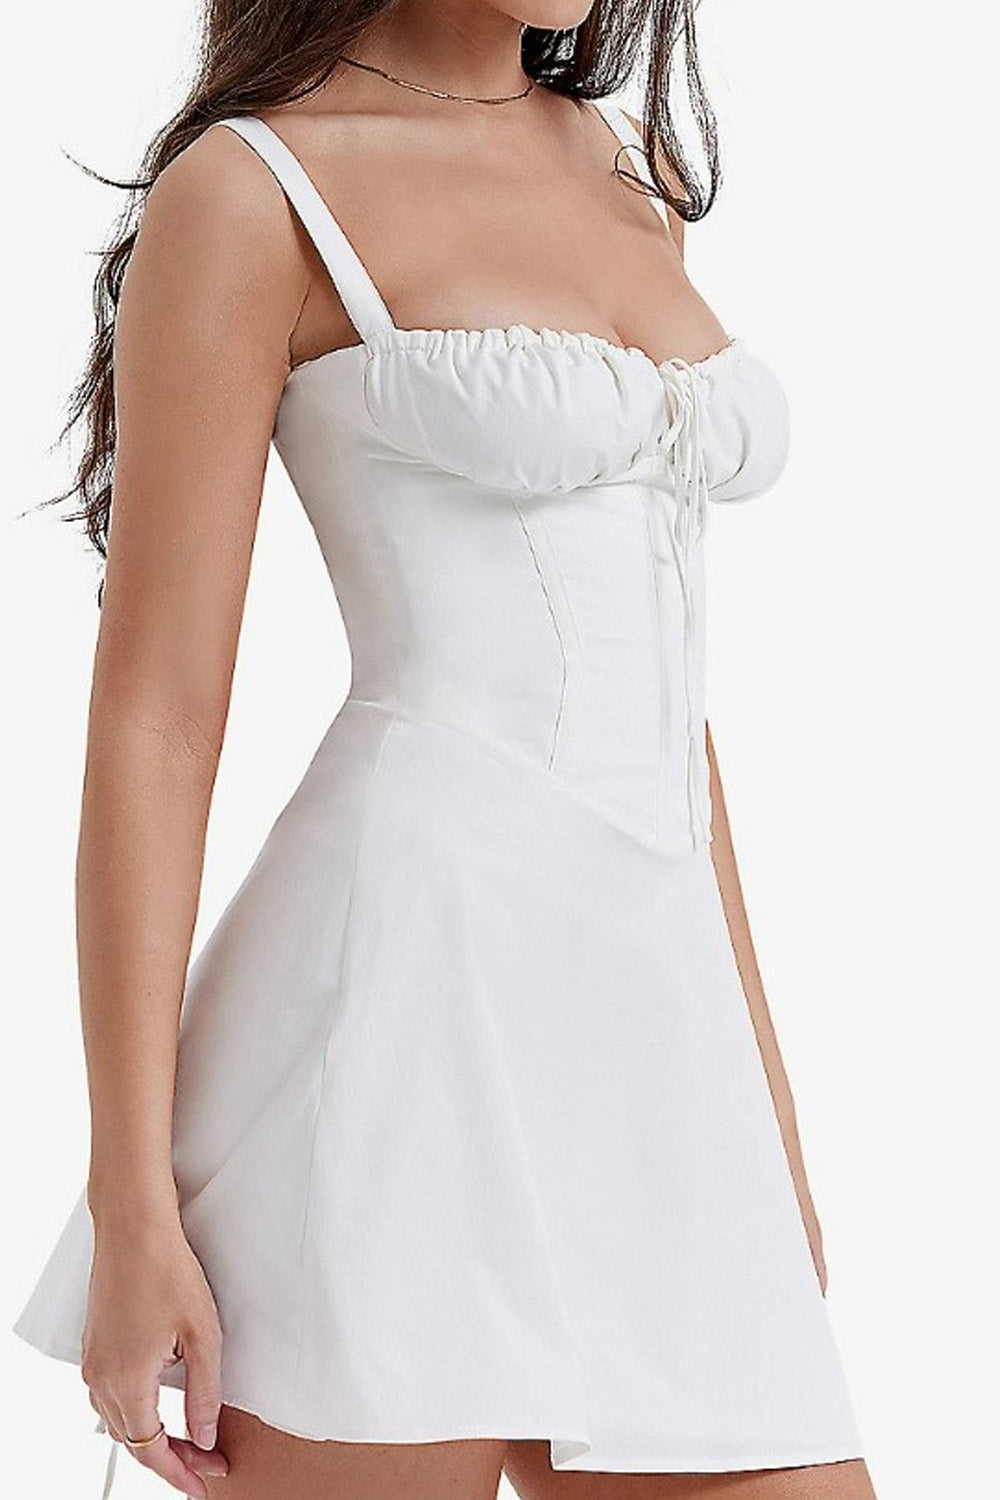 Zenith White Dress